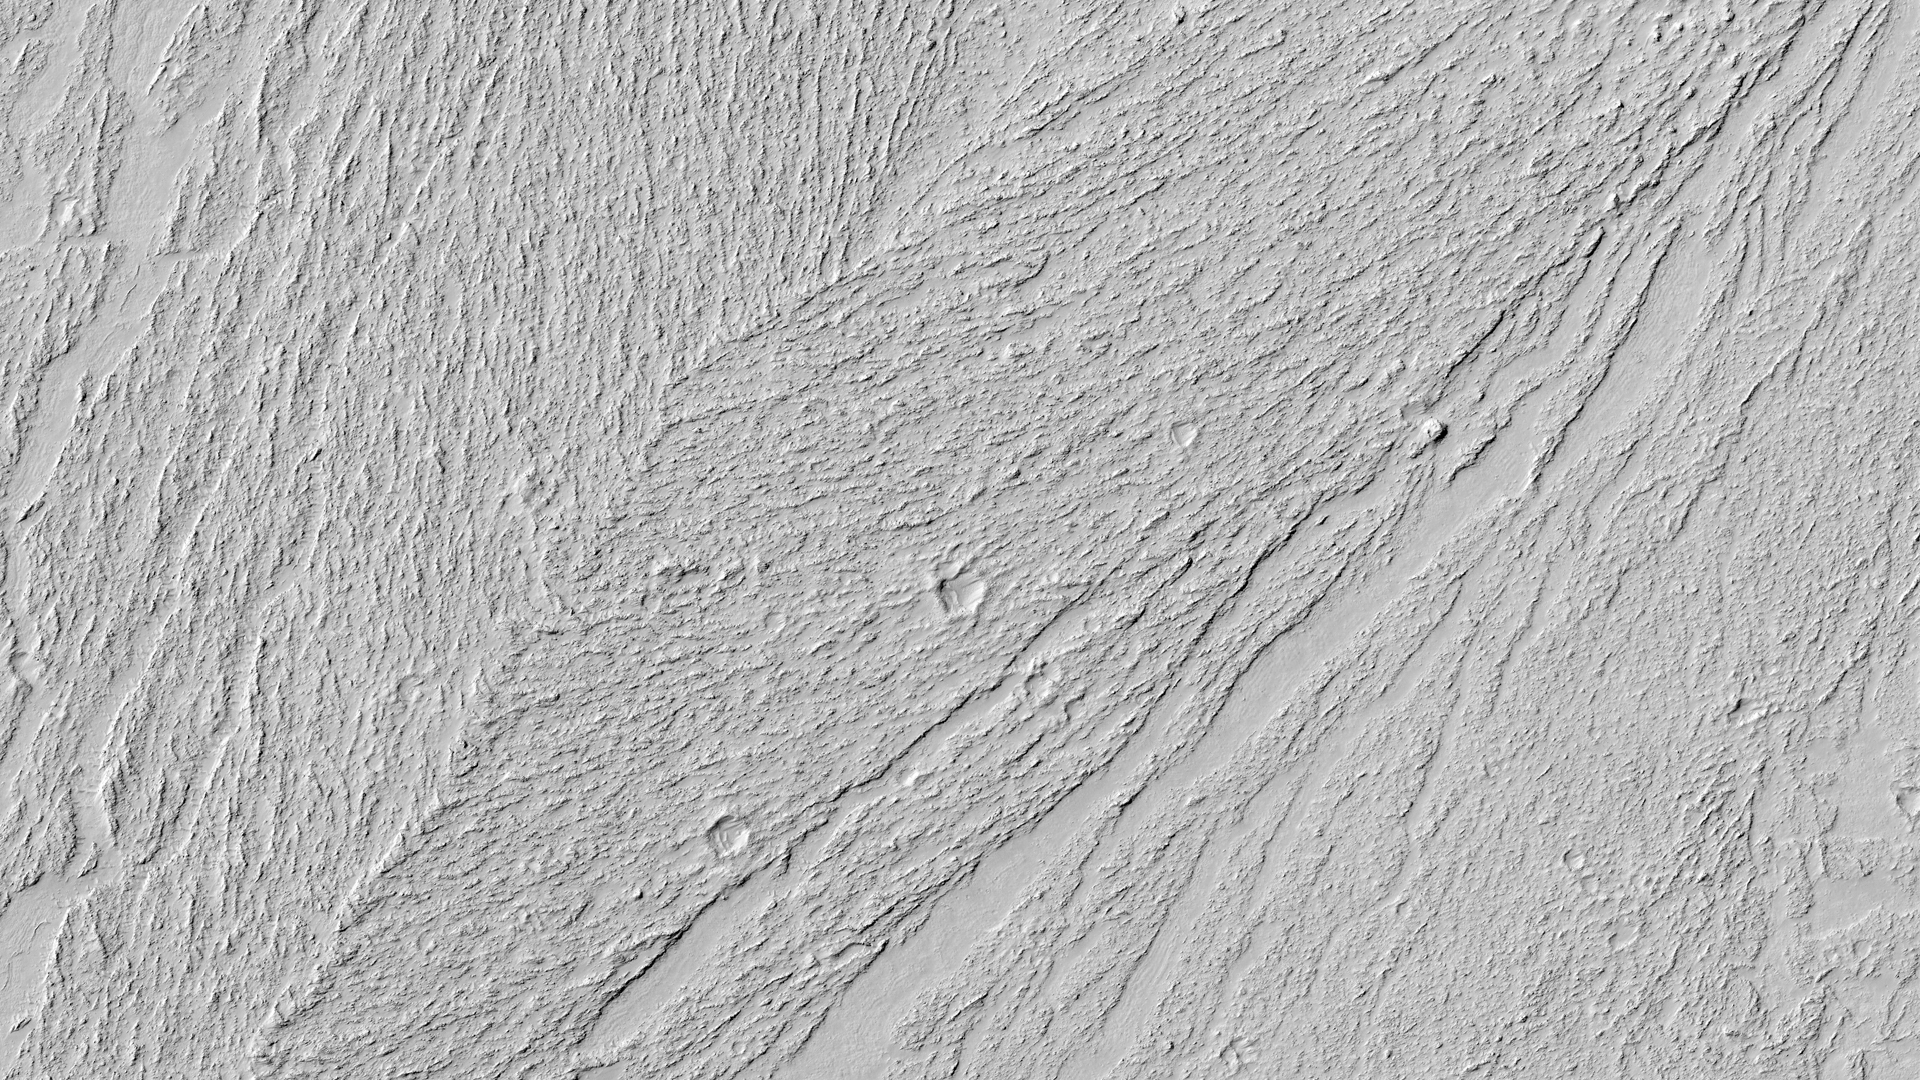 HiRISE | Chevrons on a Flow Surface in Marte Vallis (ESP_034887_1870)